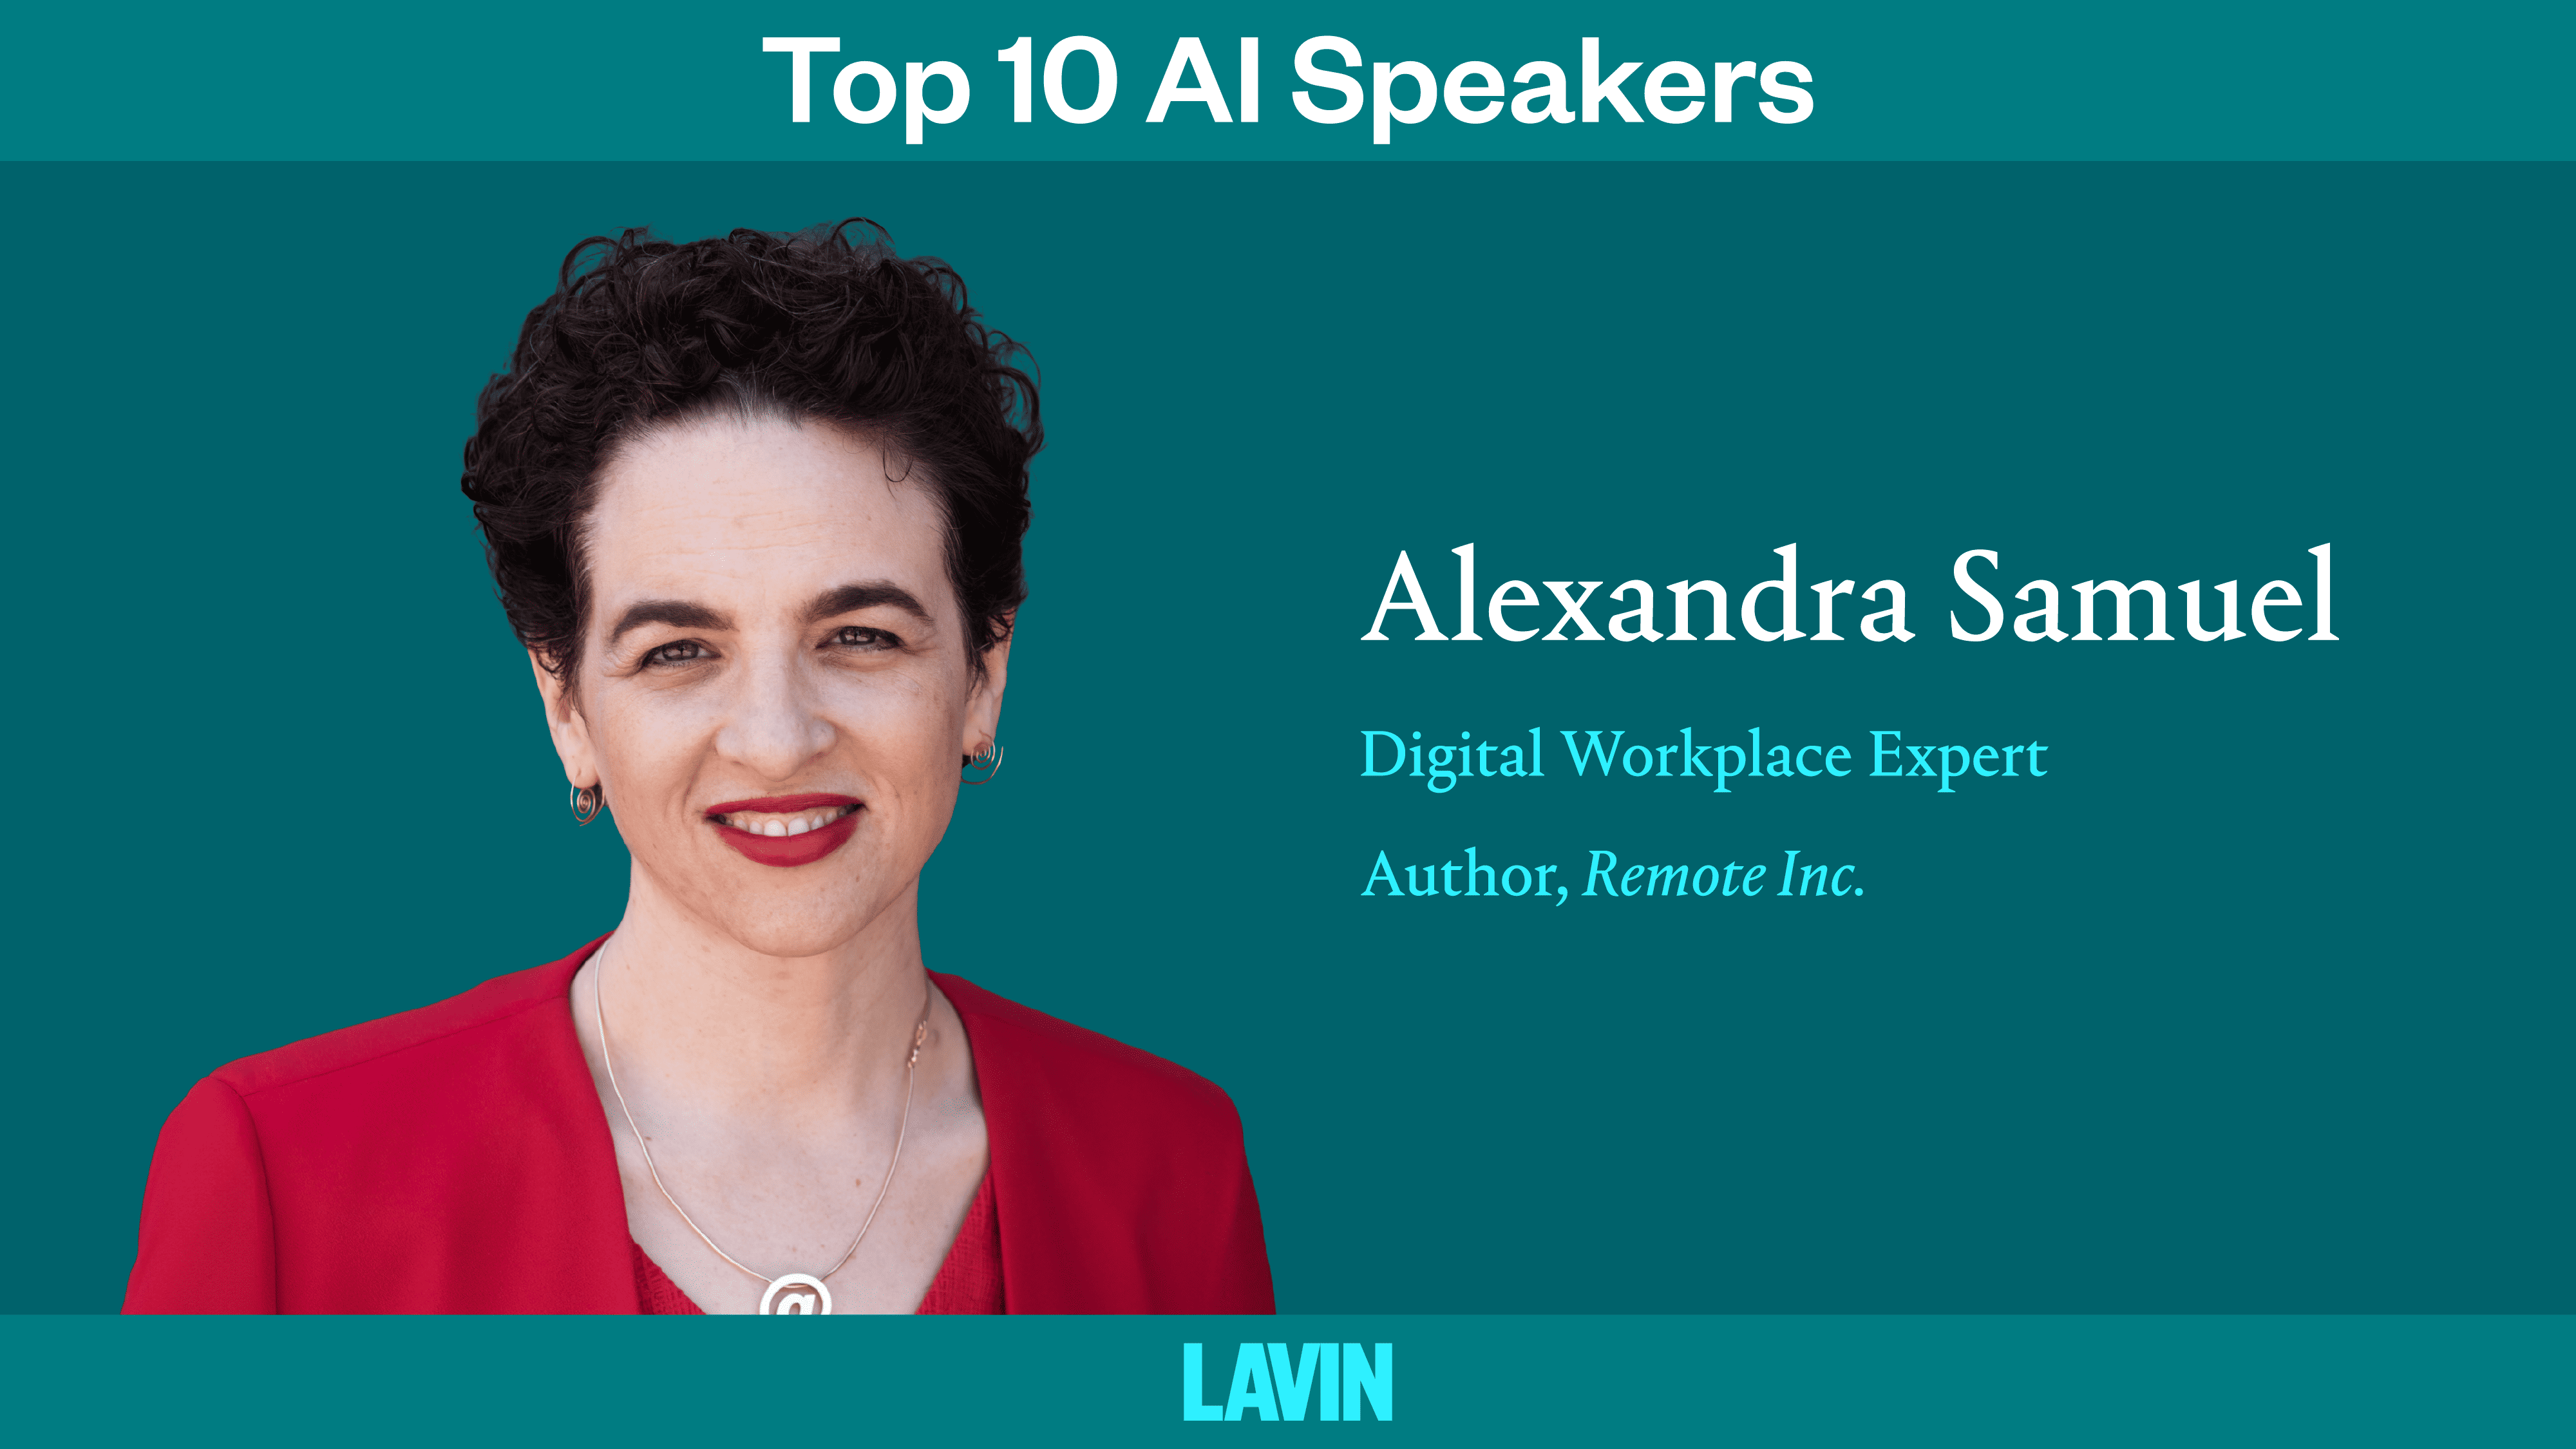 Top 10 AI Speaker Alexandra Samuel: The New Hybrid Work Is Humans + AI